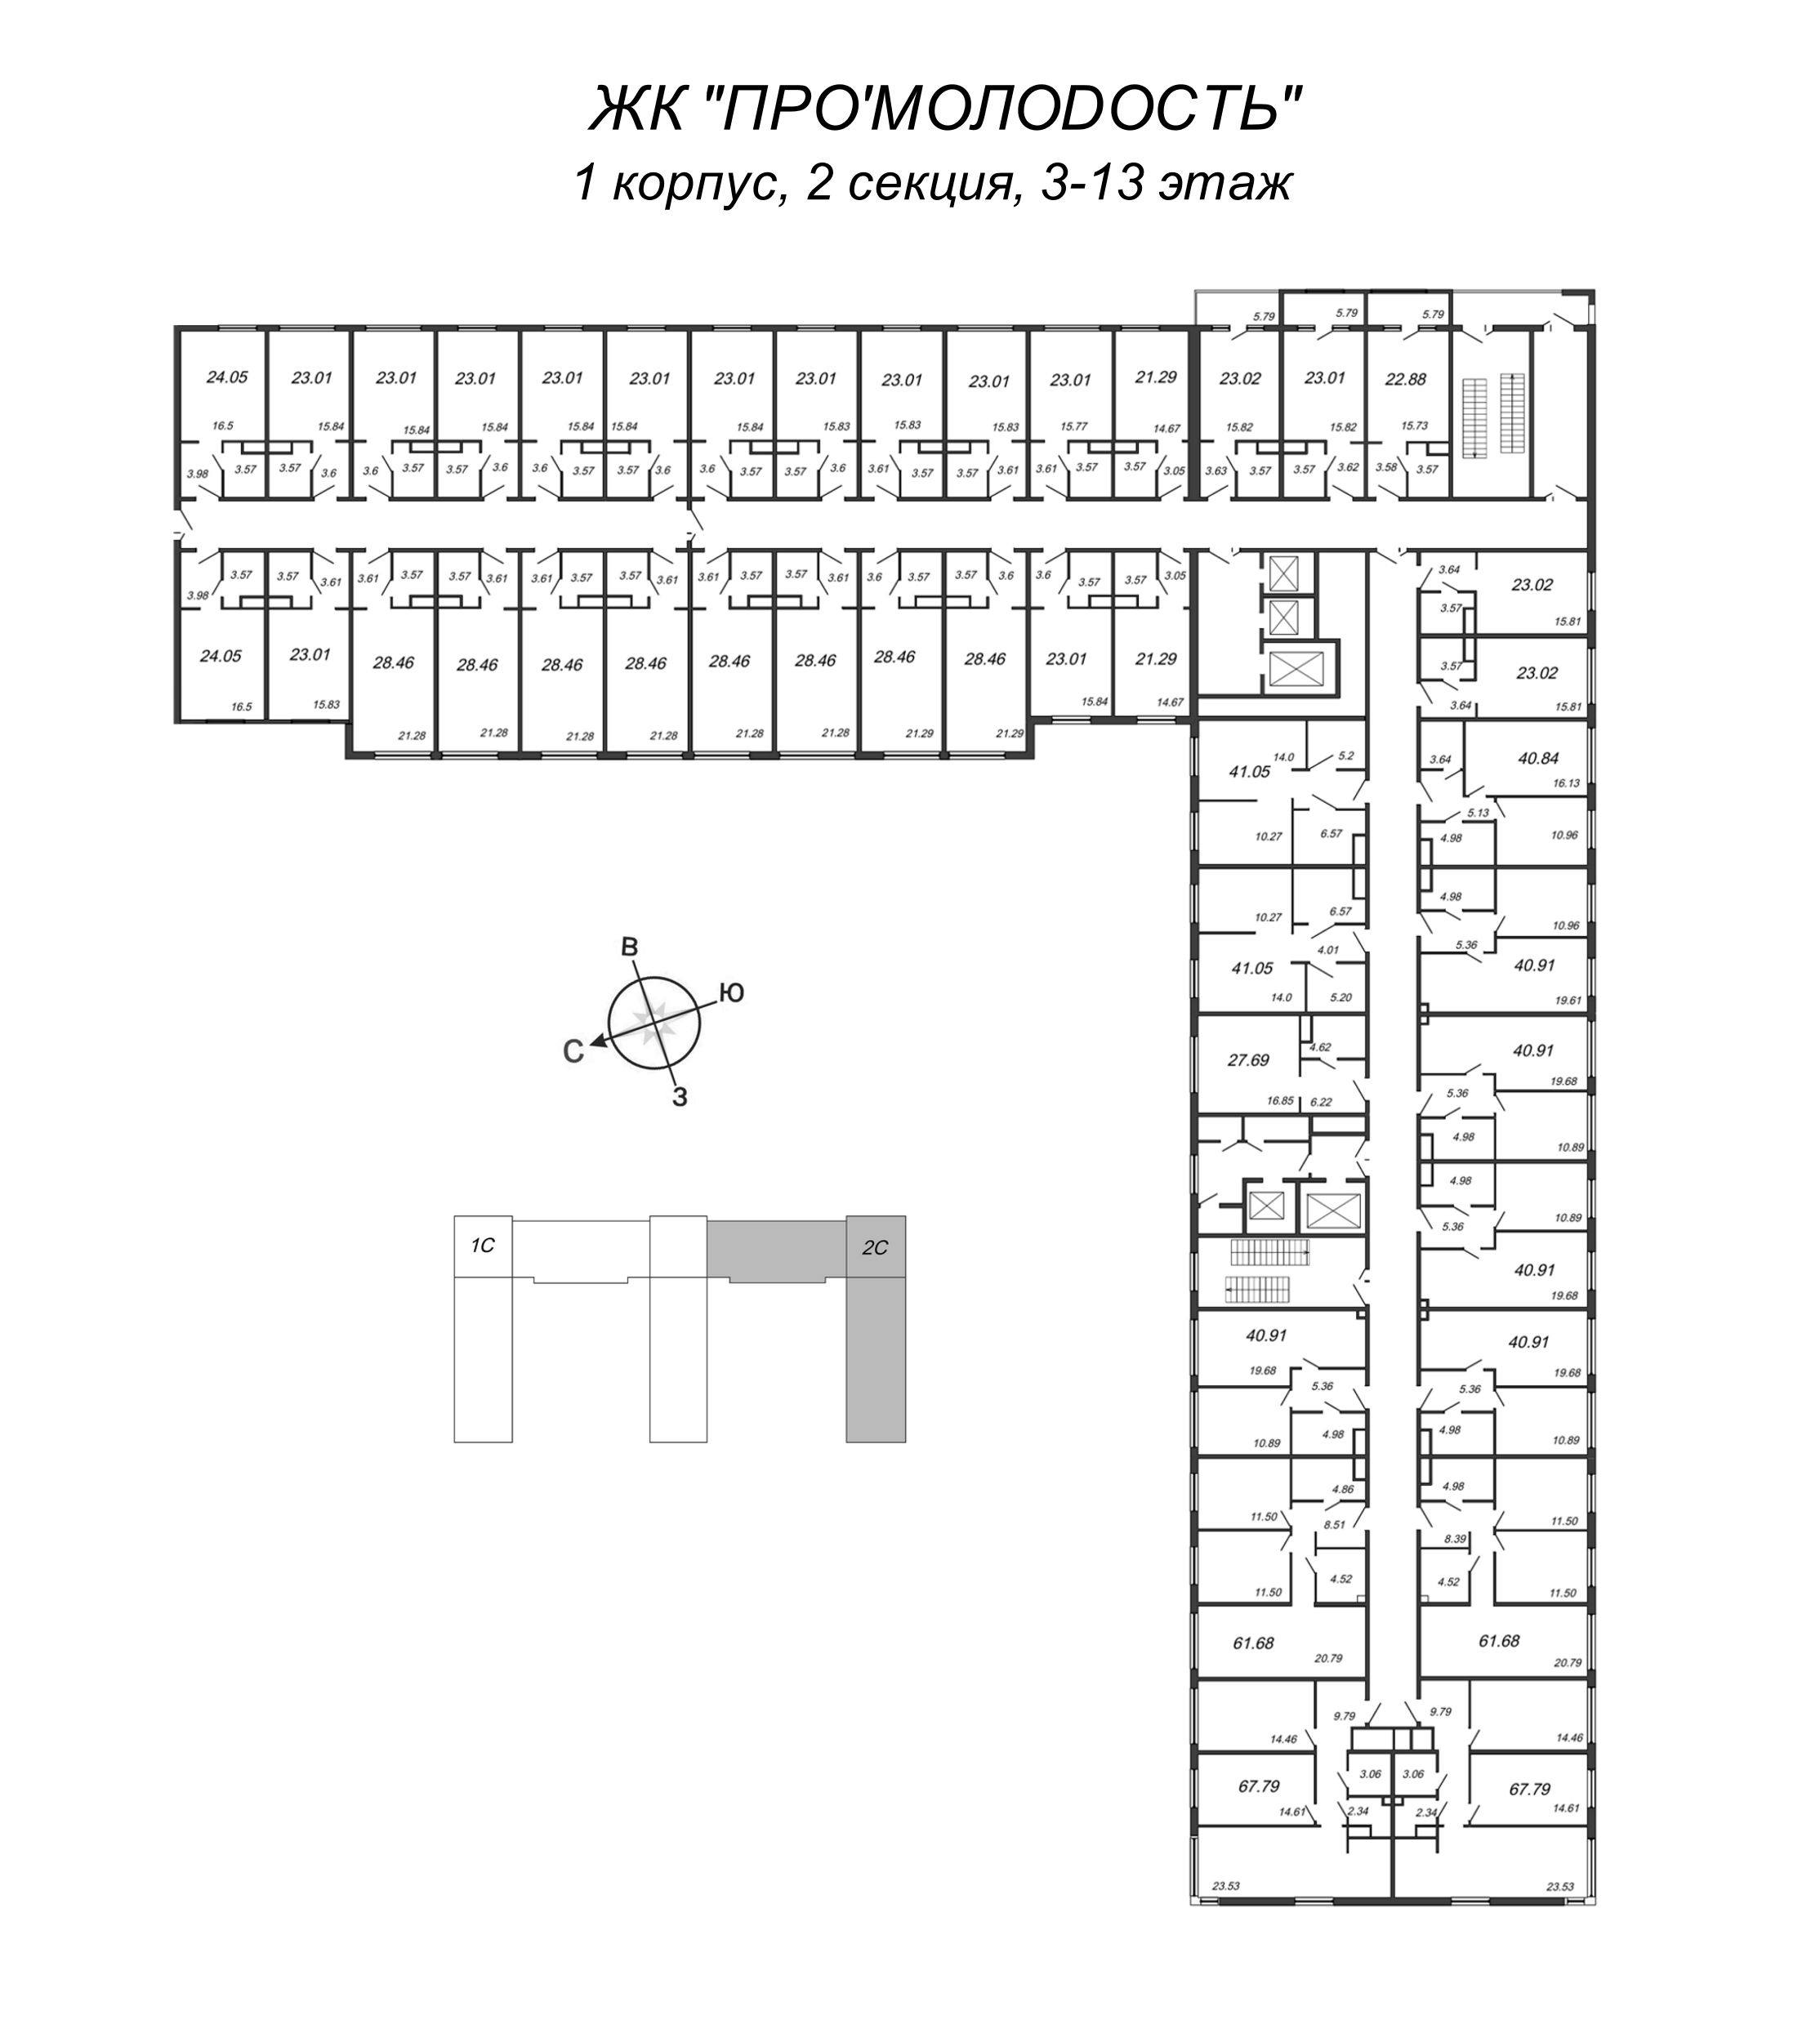 2-комнатная (Евро) квартира, 40.91 м² - планировка этажа